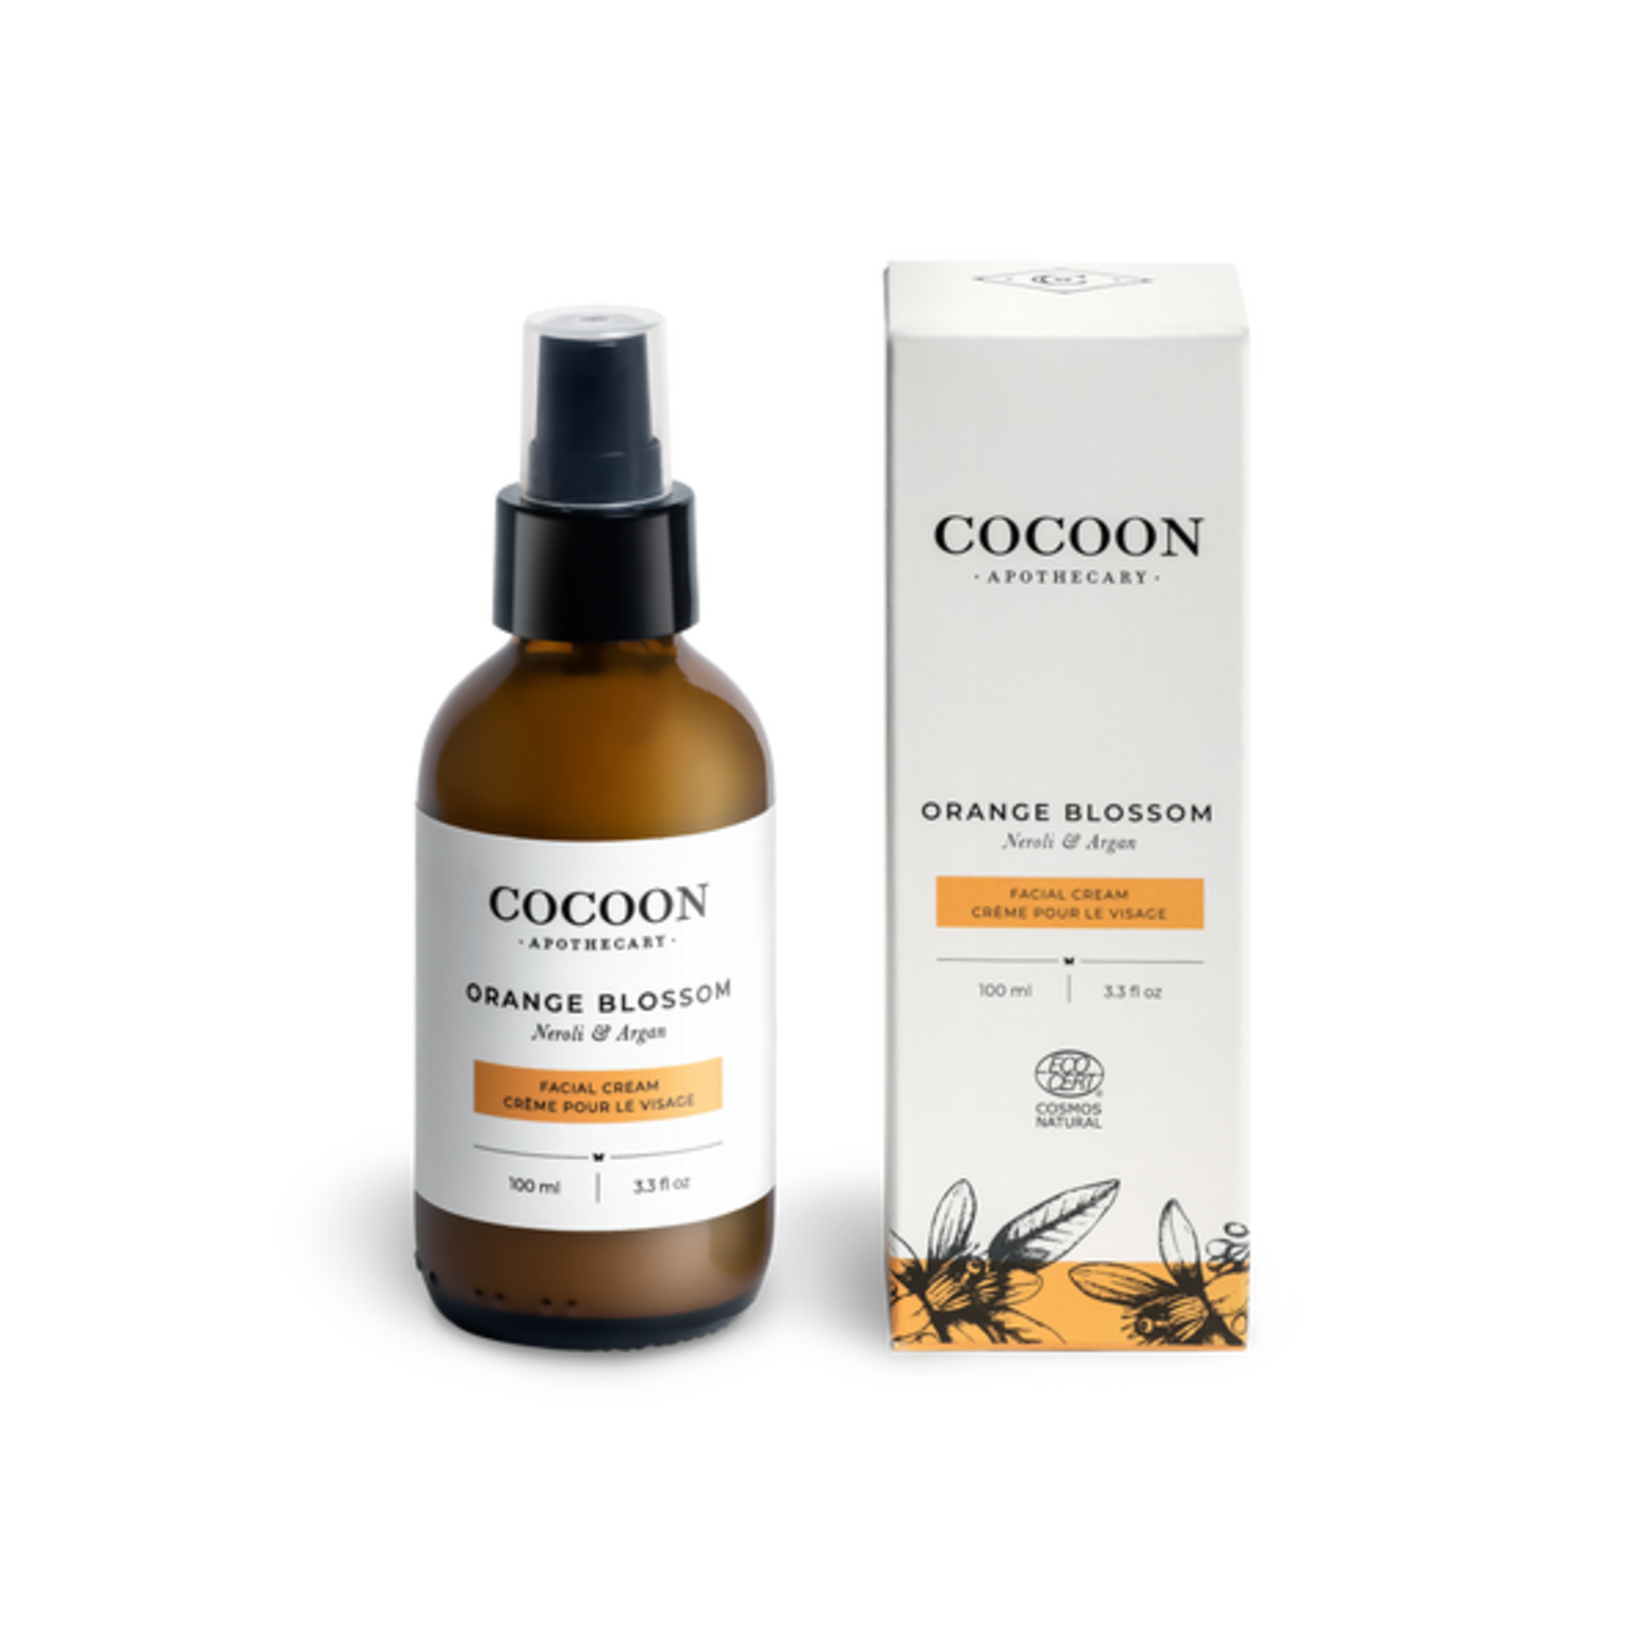 Cocoon Orange Blossom Facial Cream